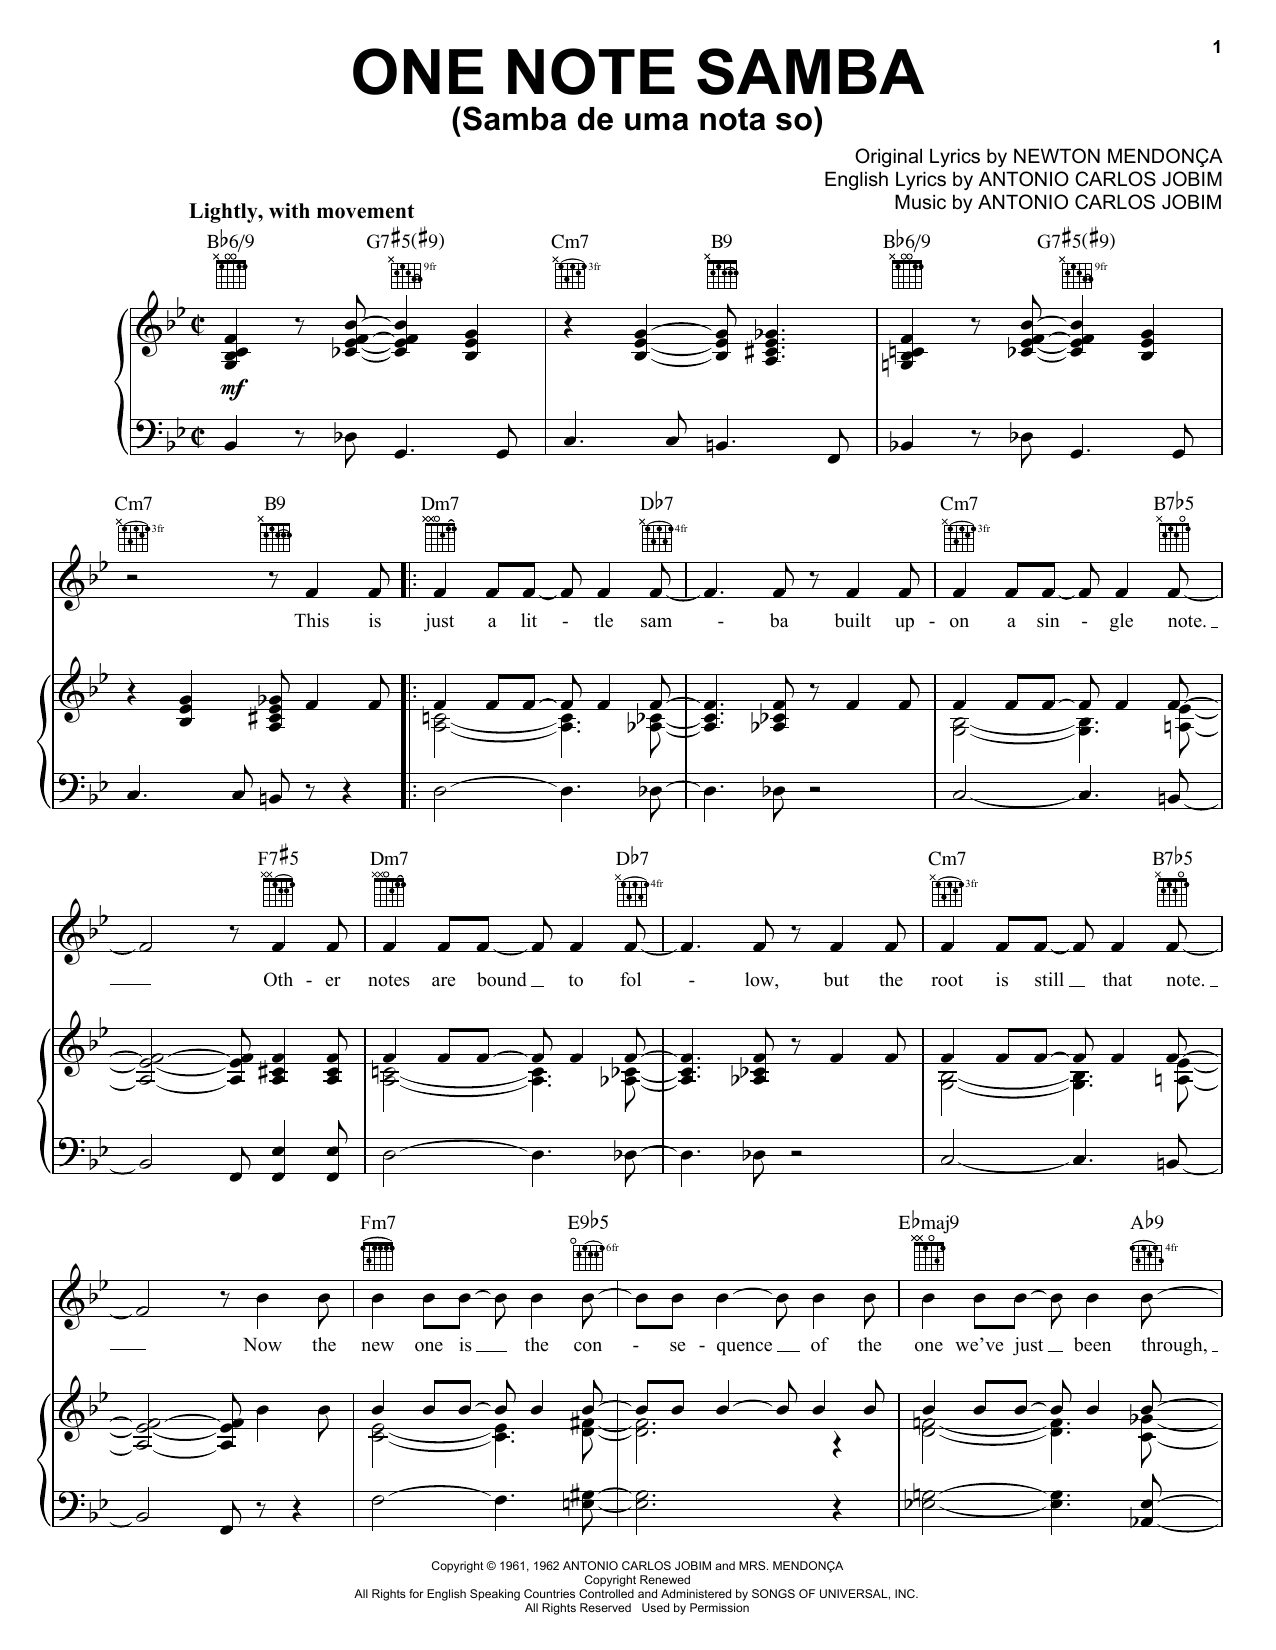 Download Antonio Carlos Jobim One Note Samba (Samba De Uma Nota So) Sheet Music and learn how to play Trombone PDF digital score in minutes